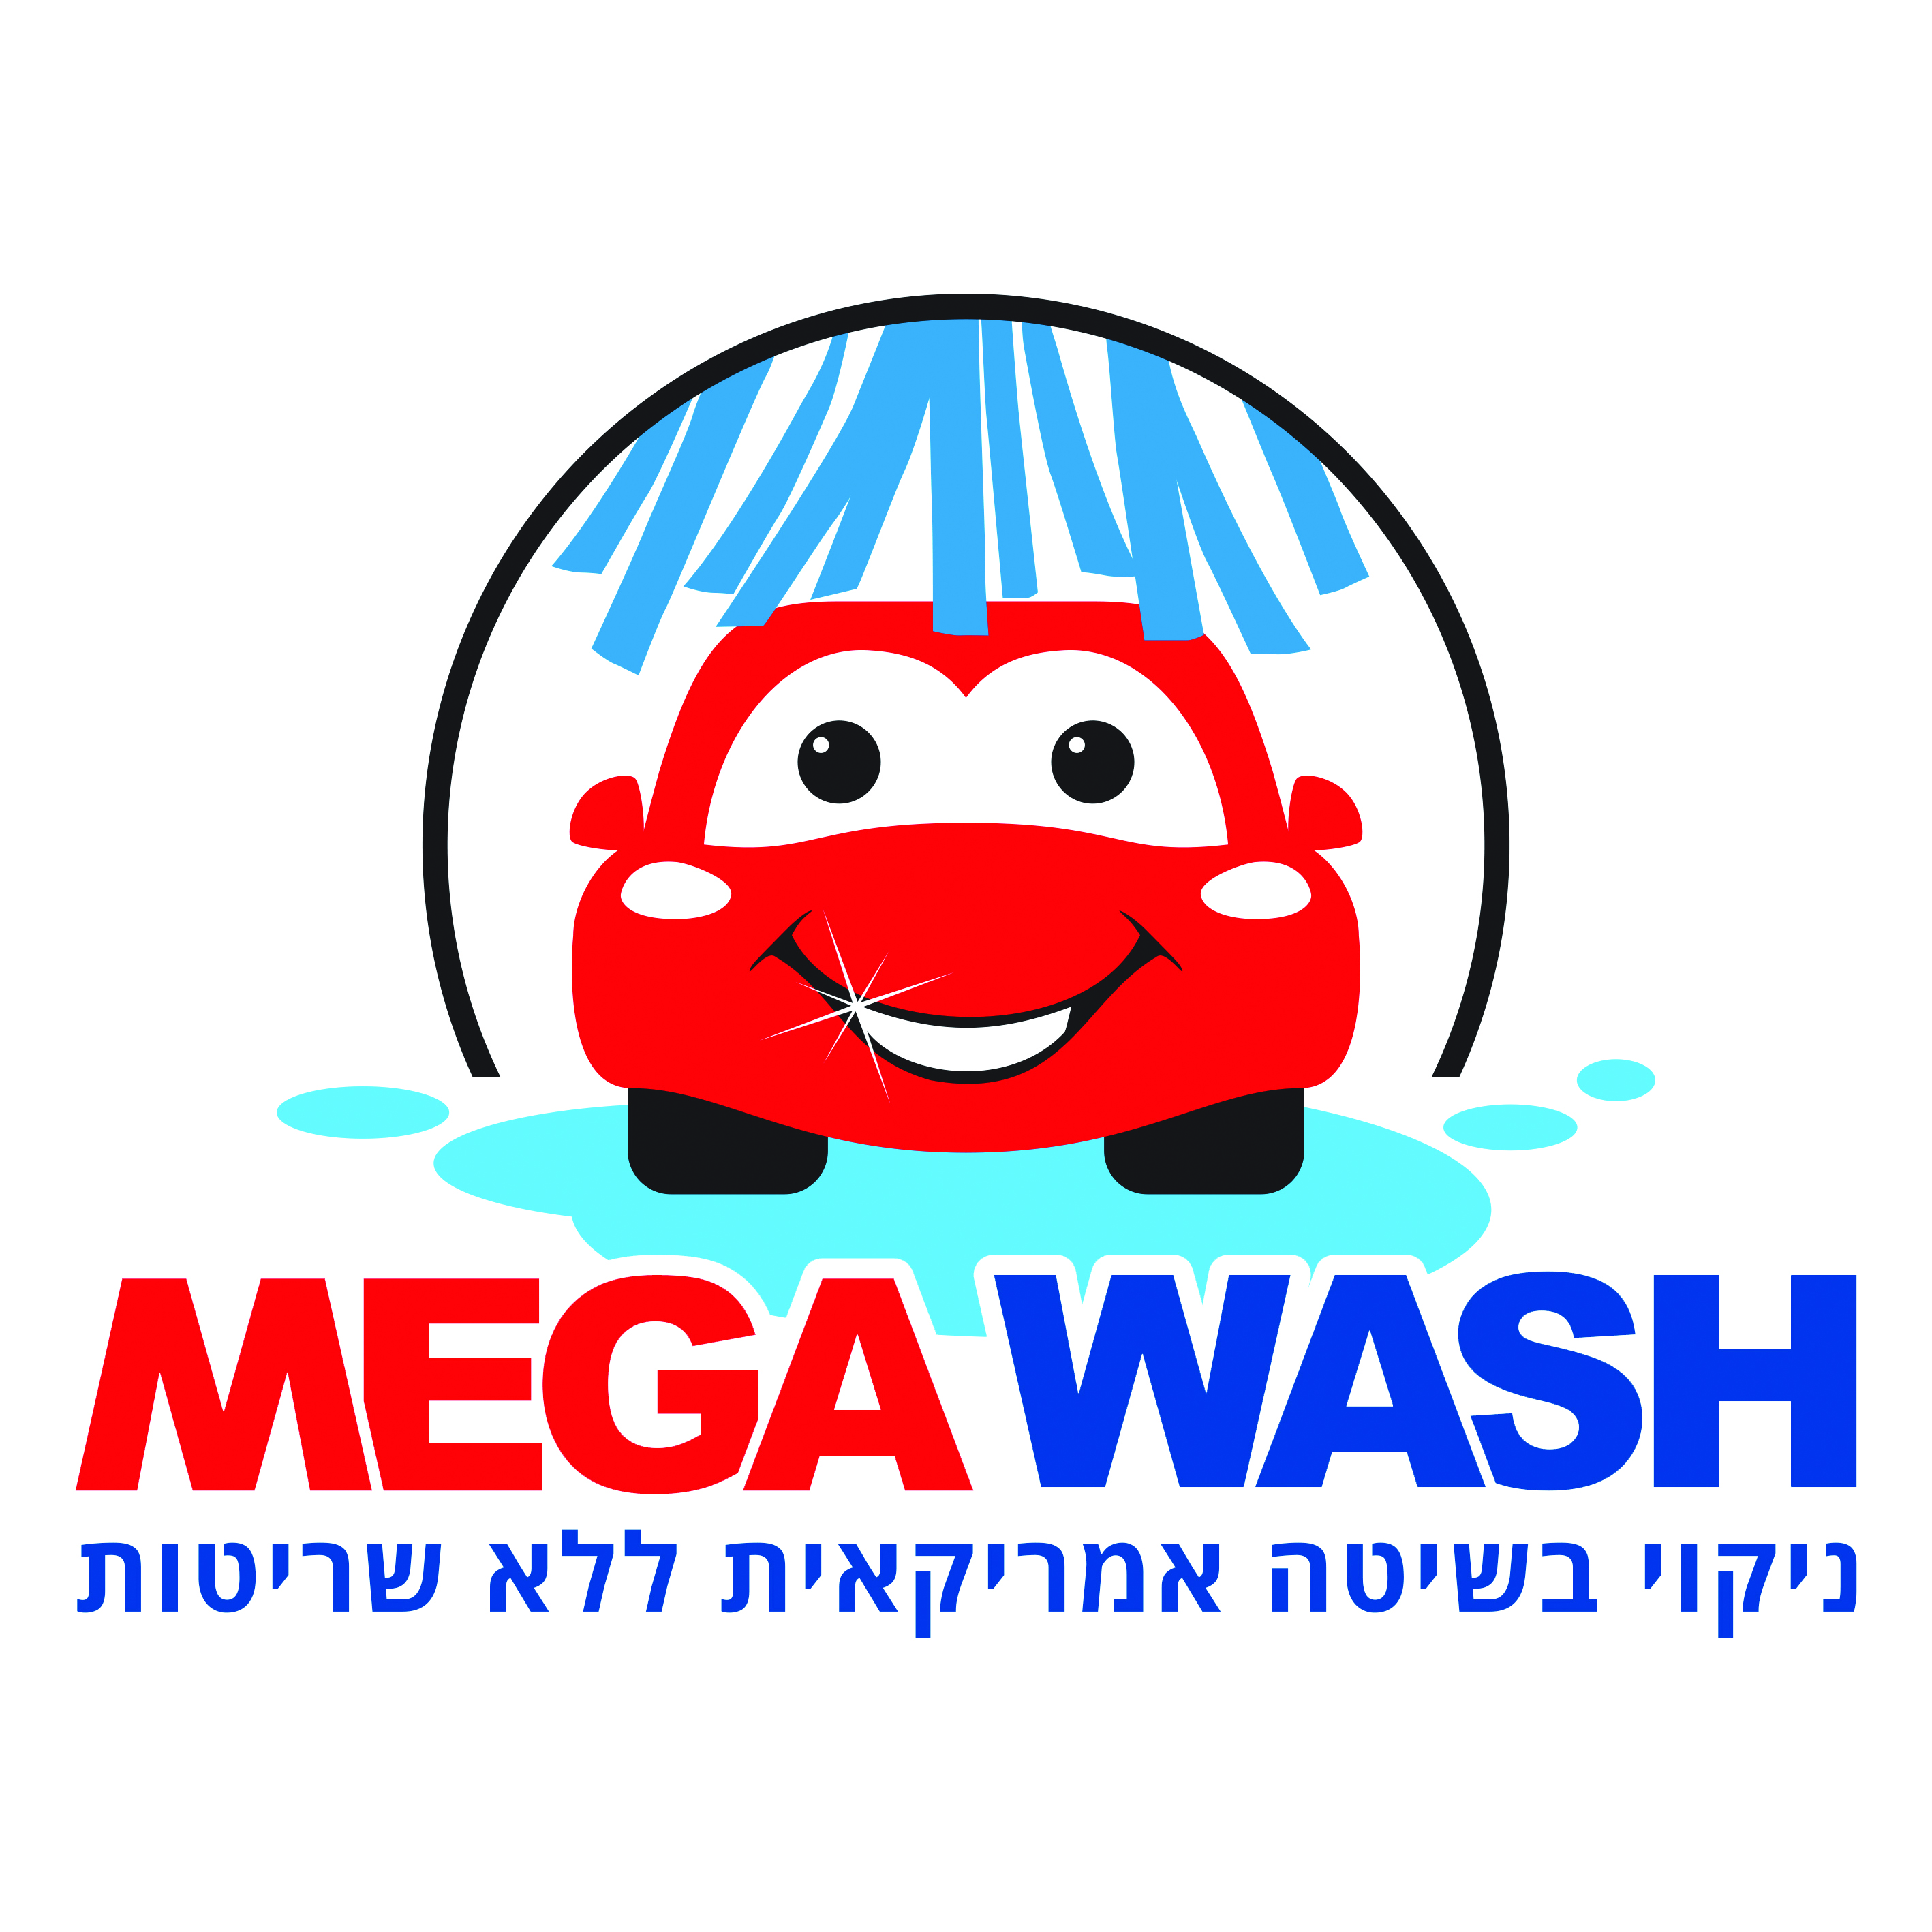 megawash logo2.jpg